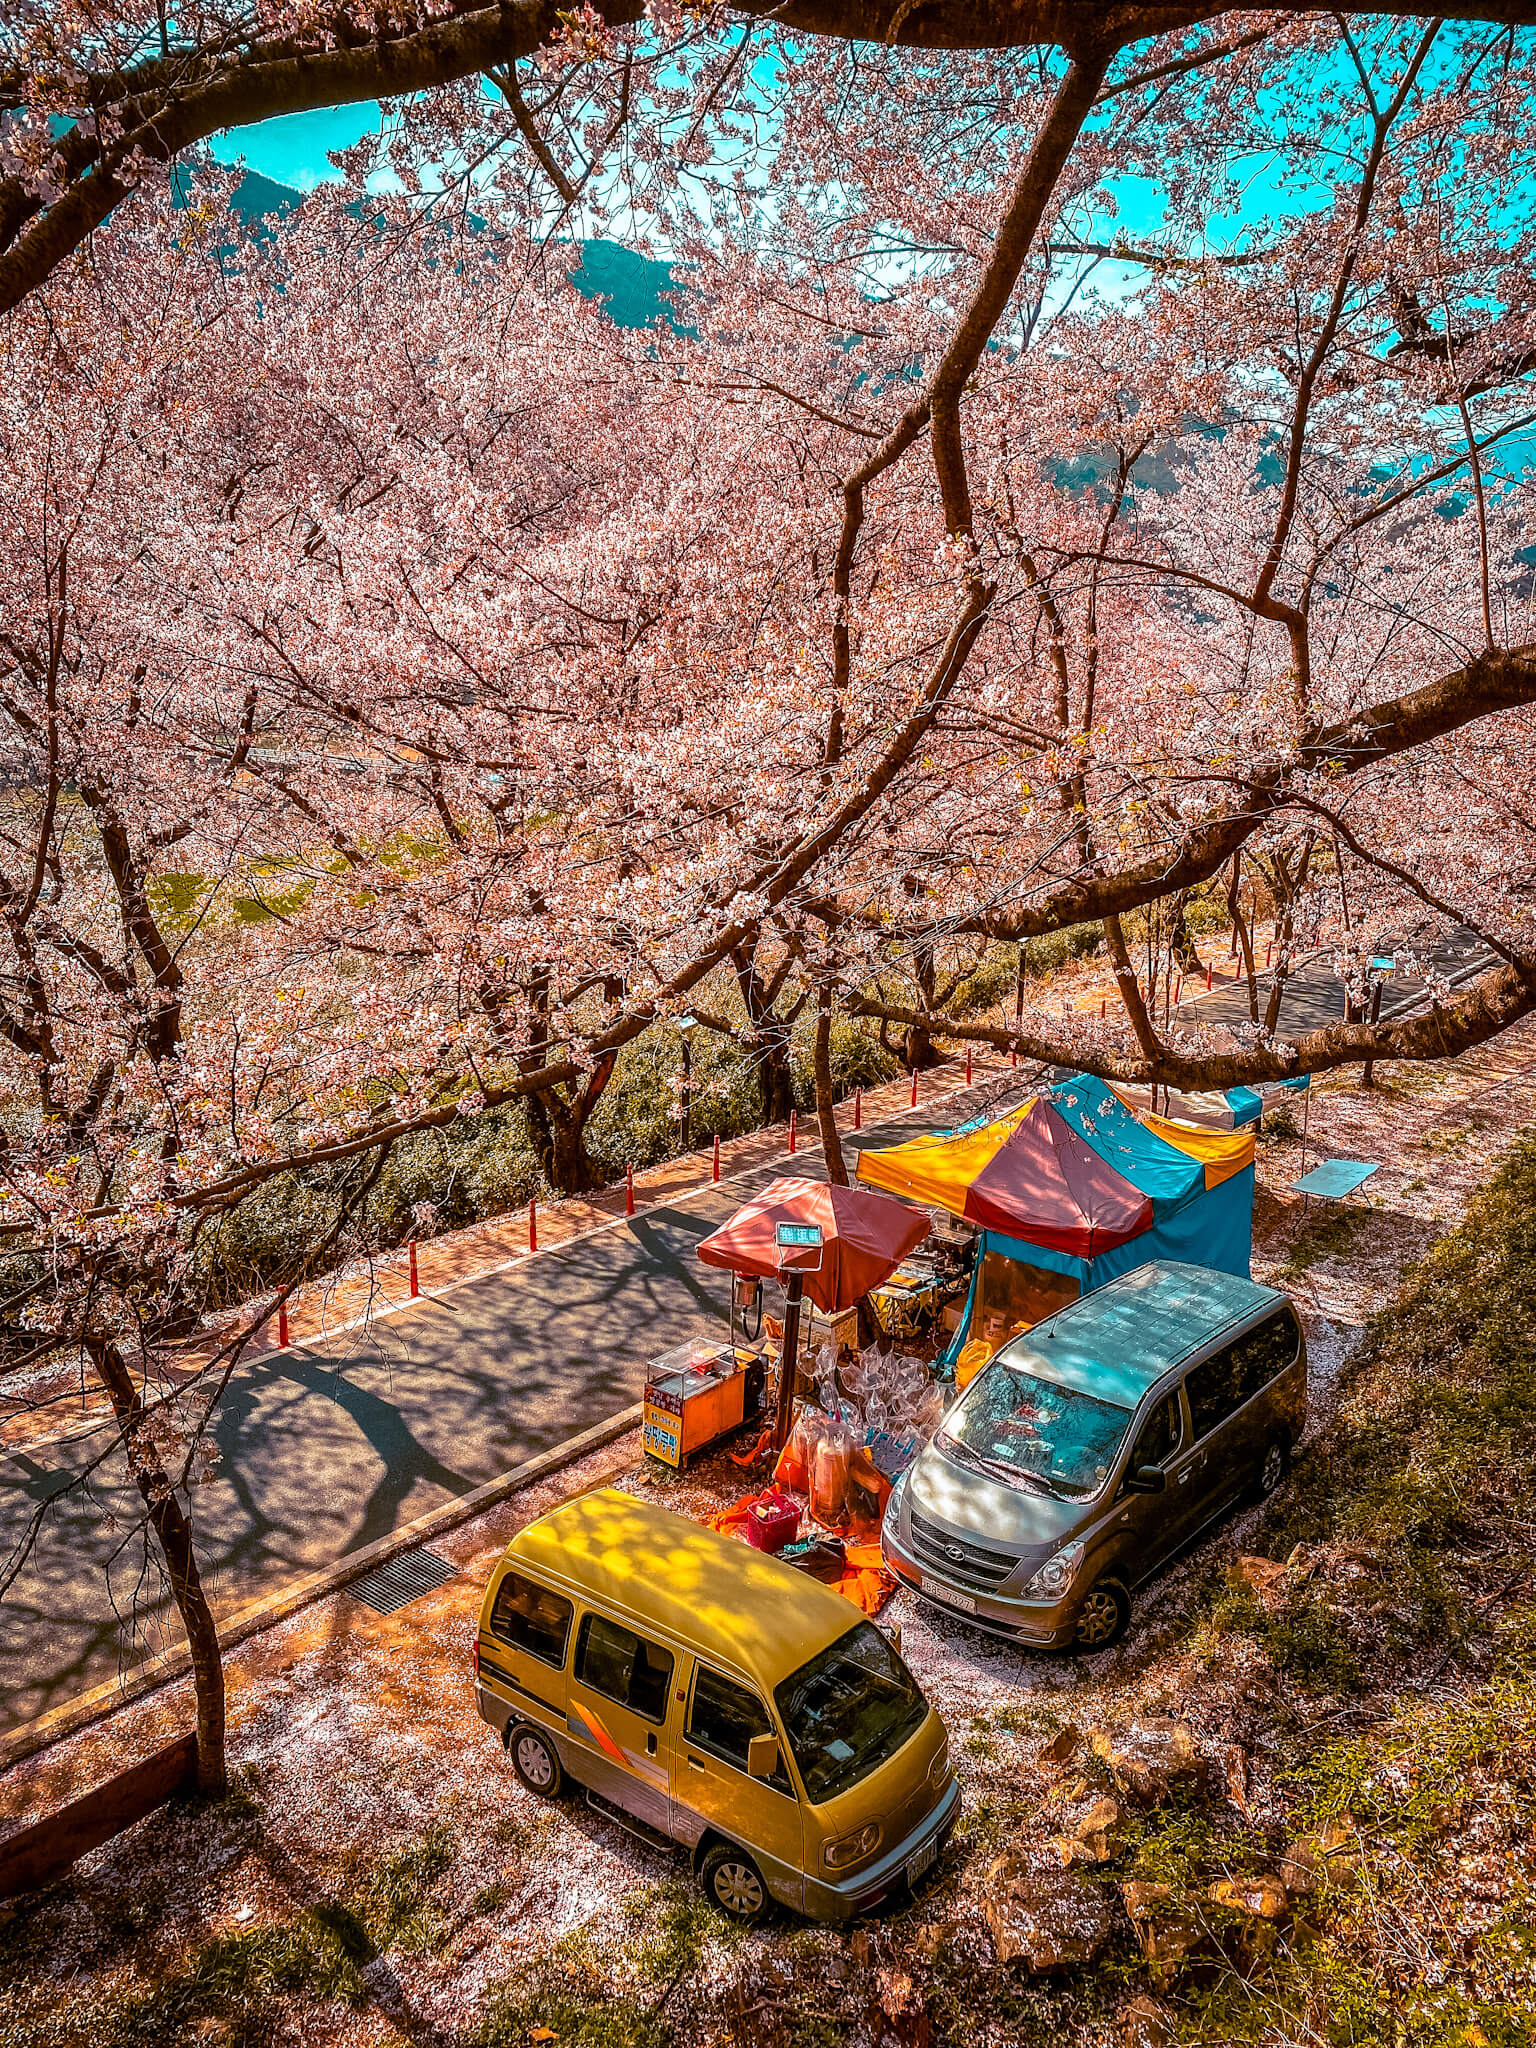 hadong simni cherry blossom road, south korea